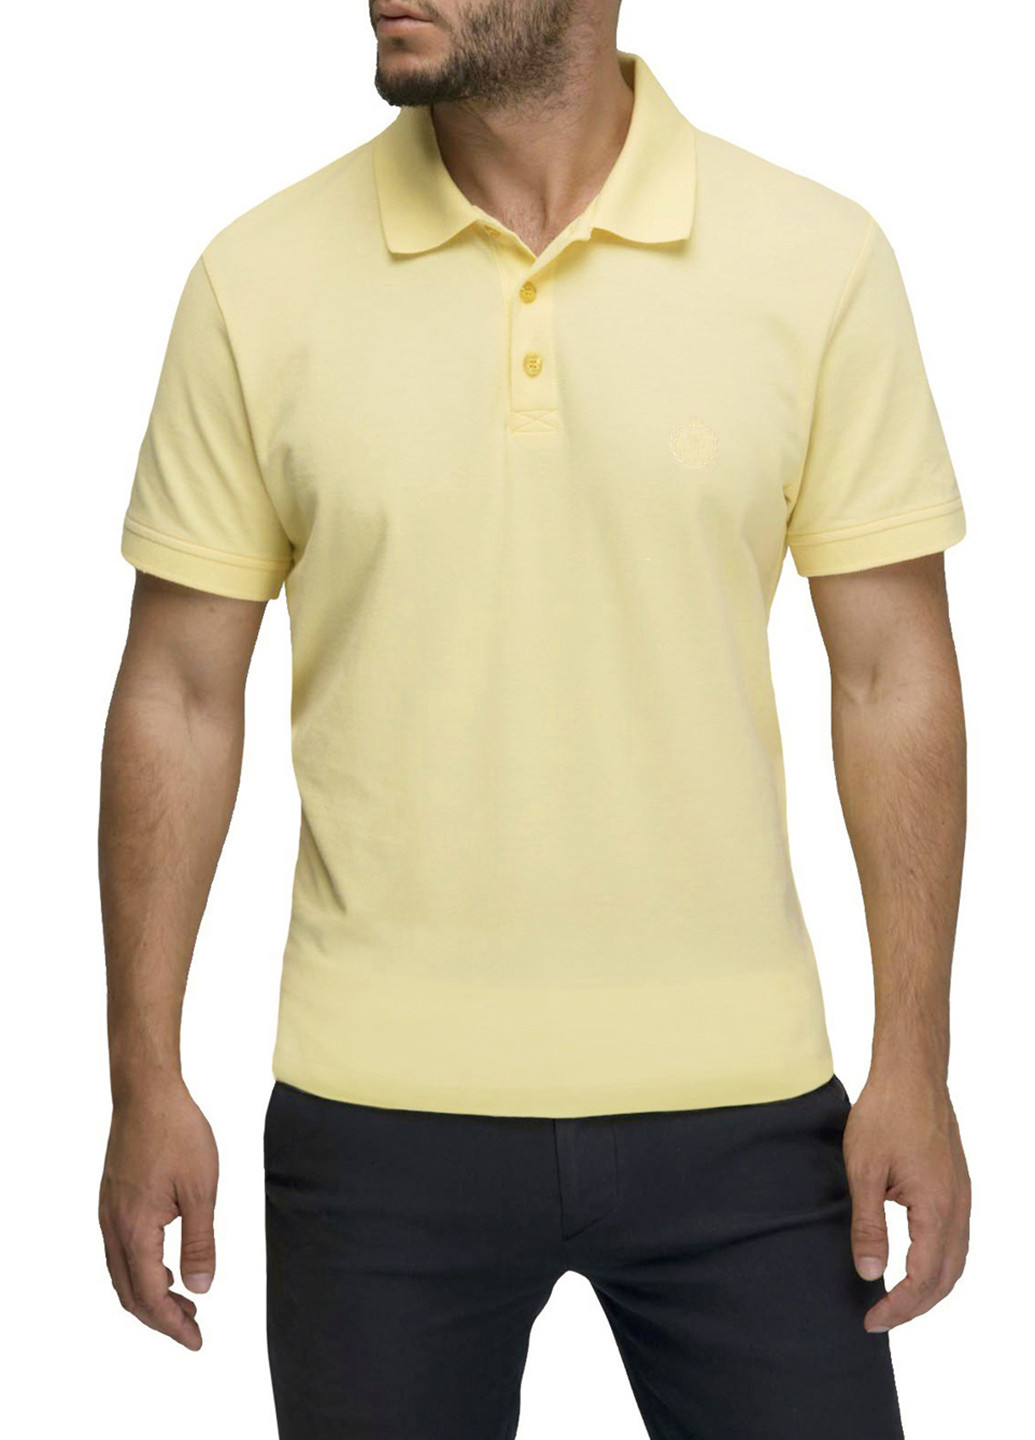 Желтая футболка-поло для мужчин Diwari однотонная